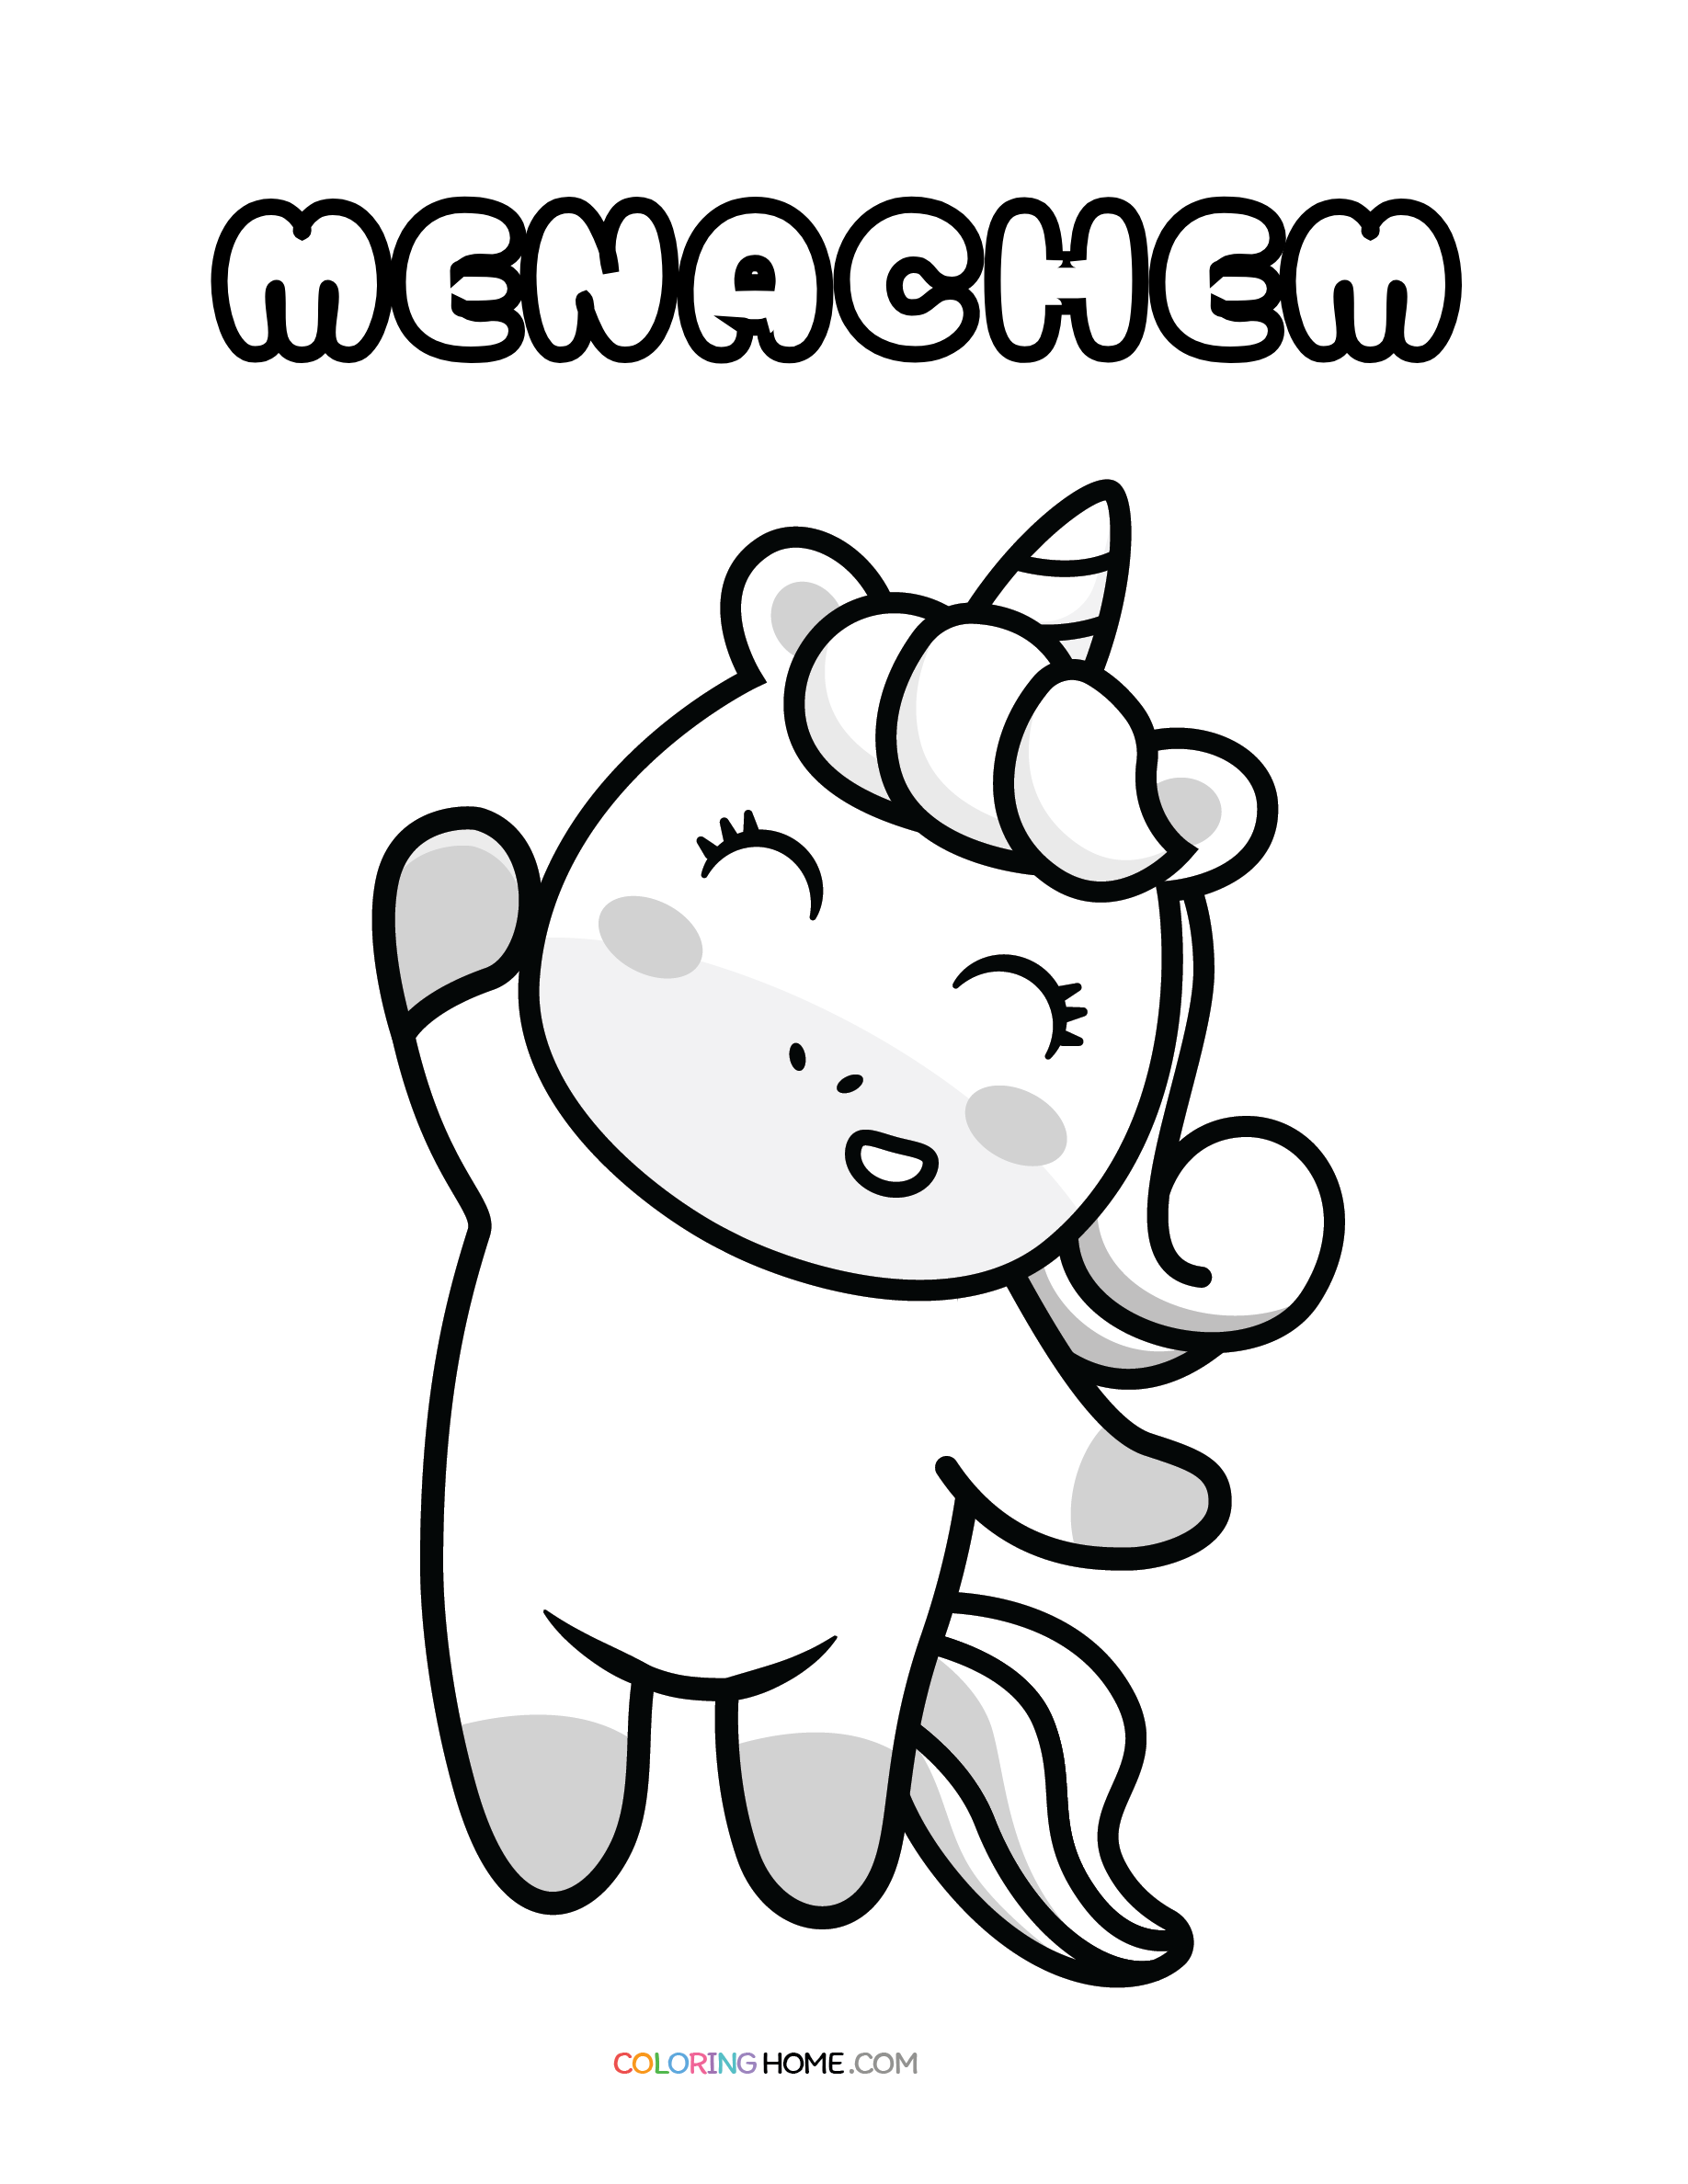 Menachem unicorn coloring page